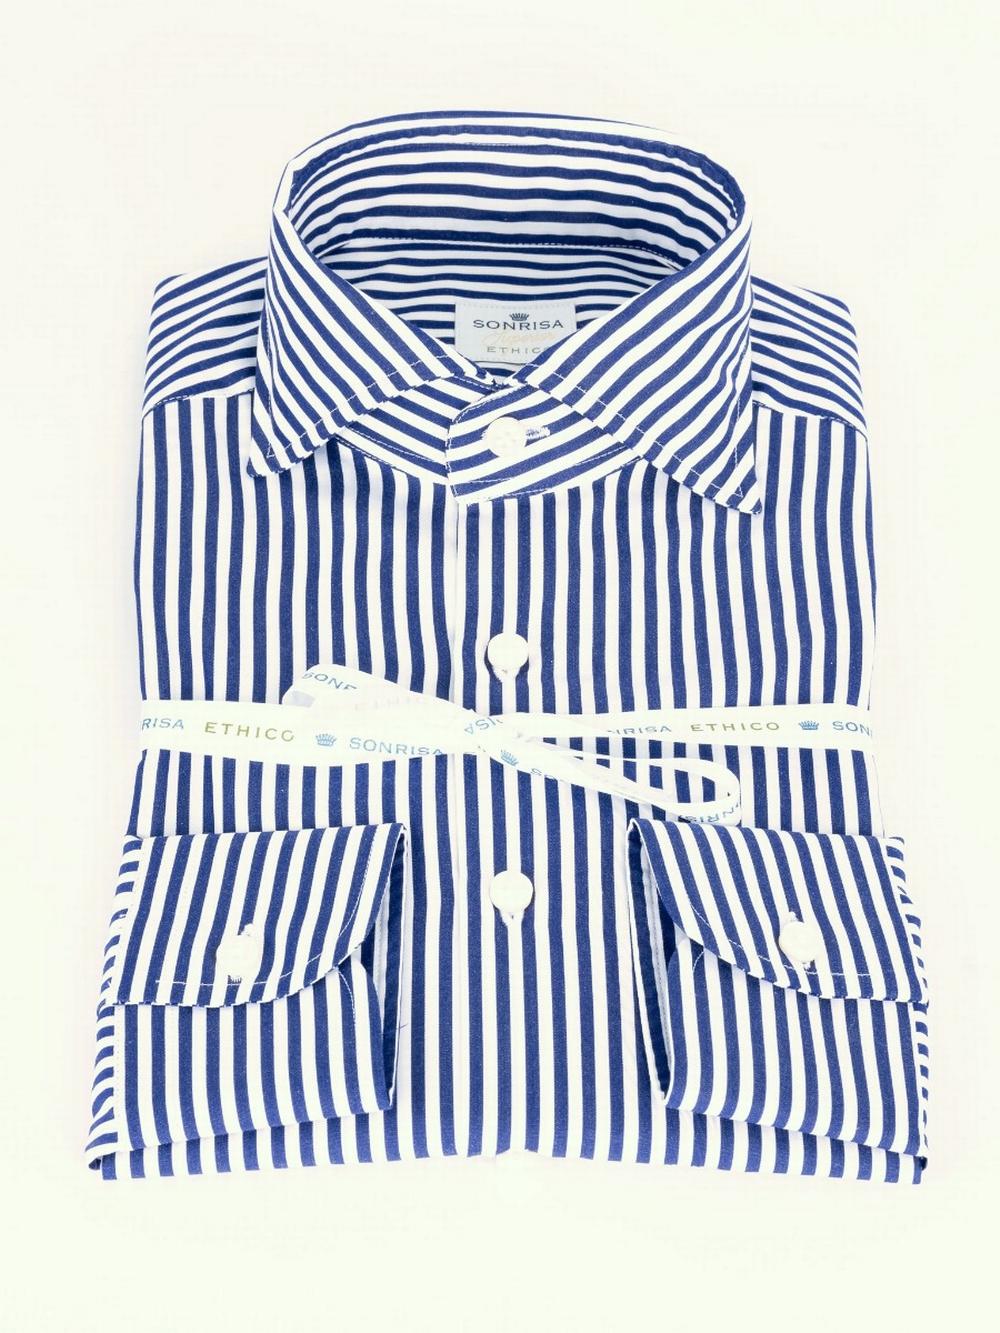 Sonrisa - Camicia a Righe Bianco/Blu Uomo - ETH2 ET022 03 B592